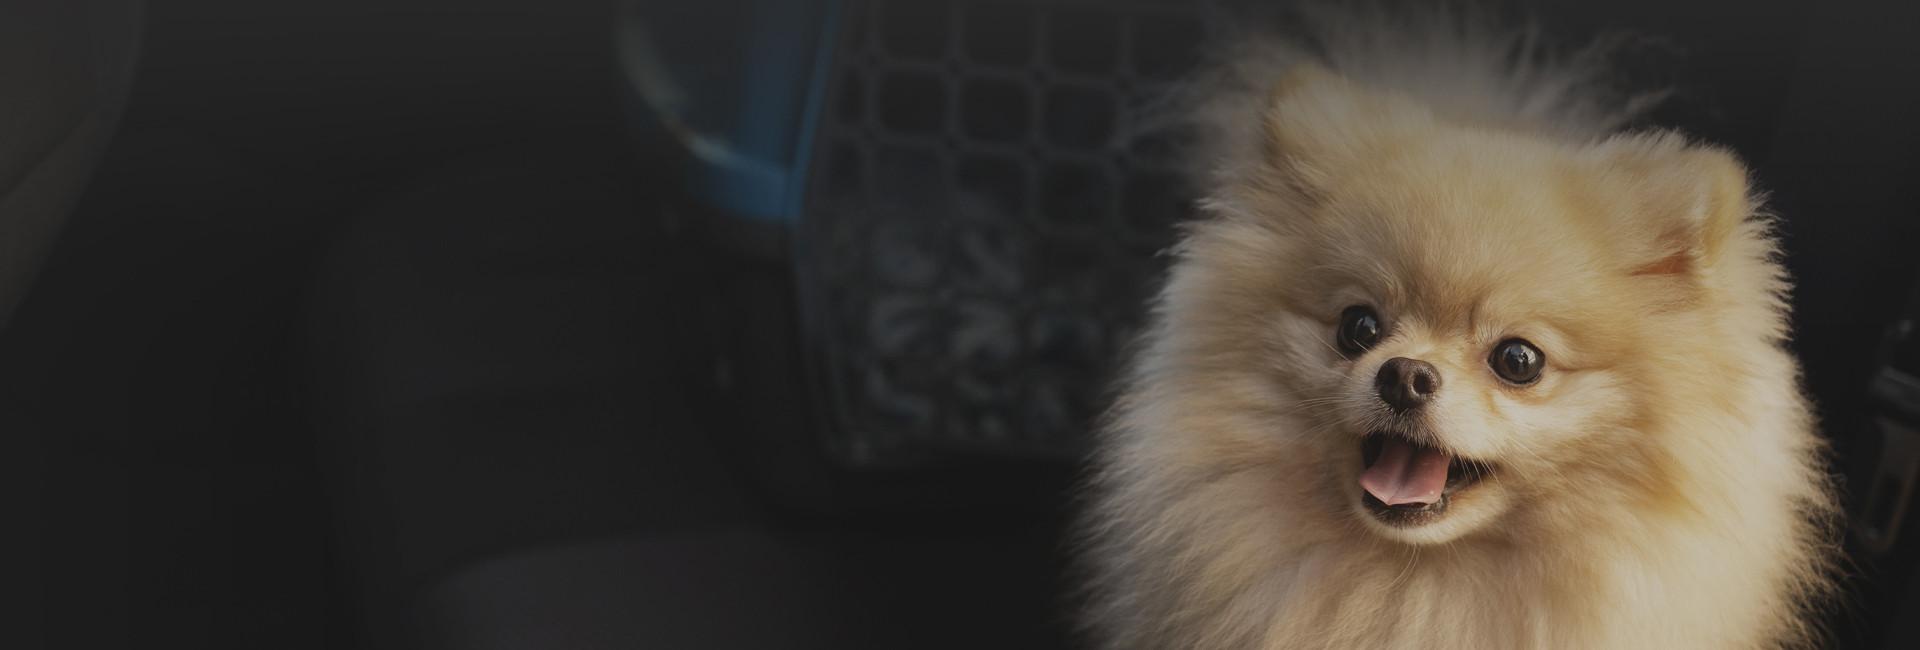 adorable Pomeranian dog in a car